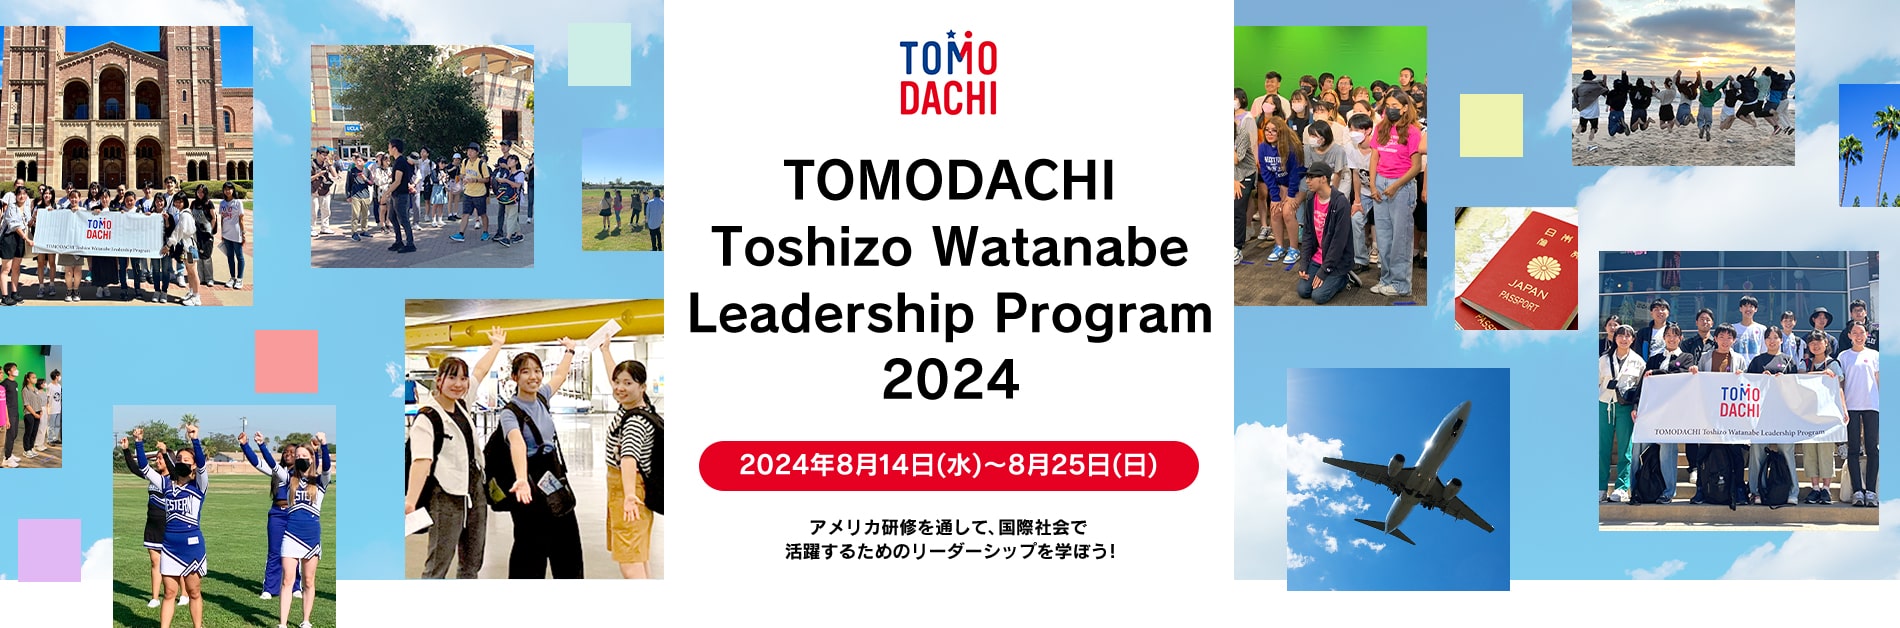 TOMODACHI Toshizo Watanabe Leadership Program 2024 2024年8月14日(水)〜8月25日(日) アメリカ研修を通して国際社会で活躍するためのリーダーシップを学ぼう！